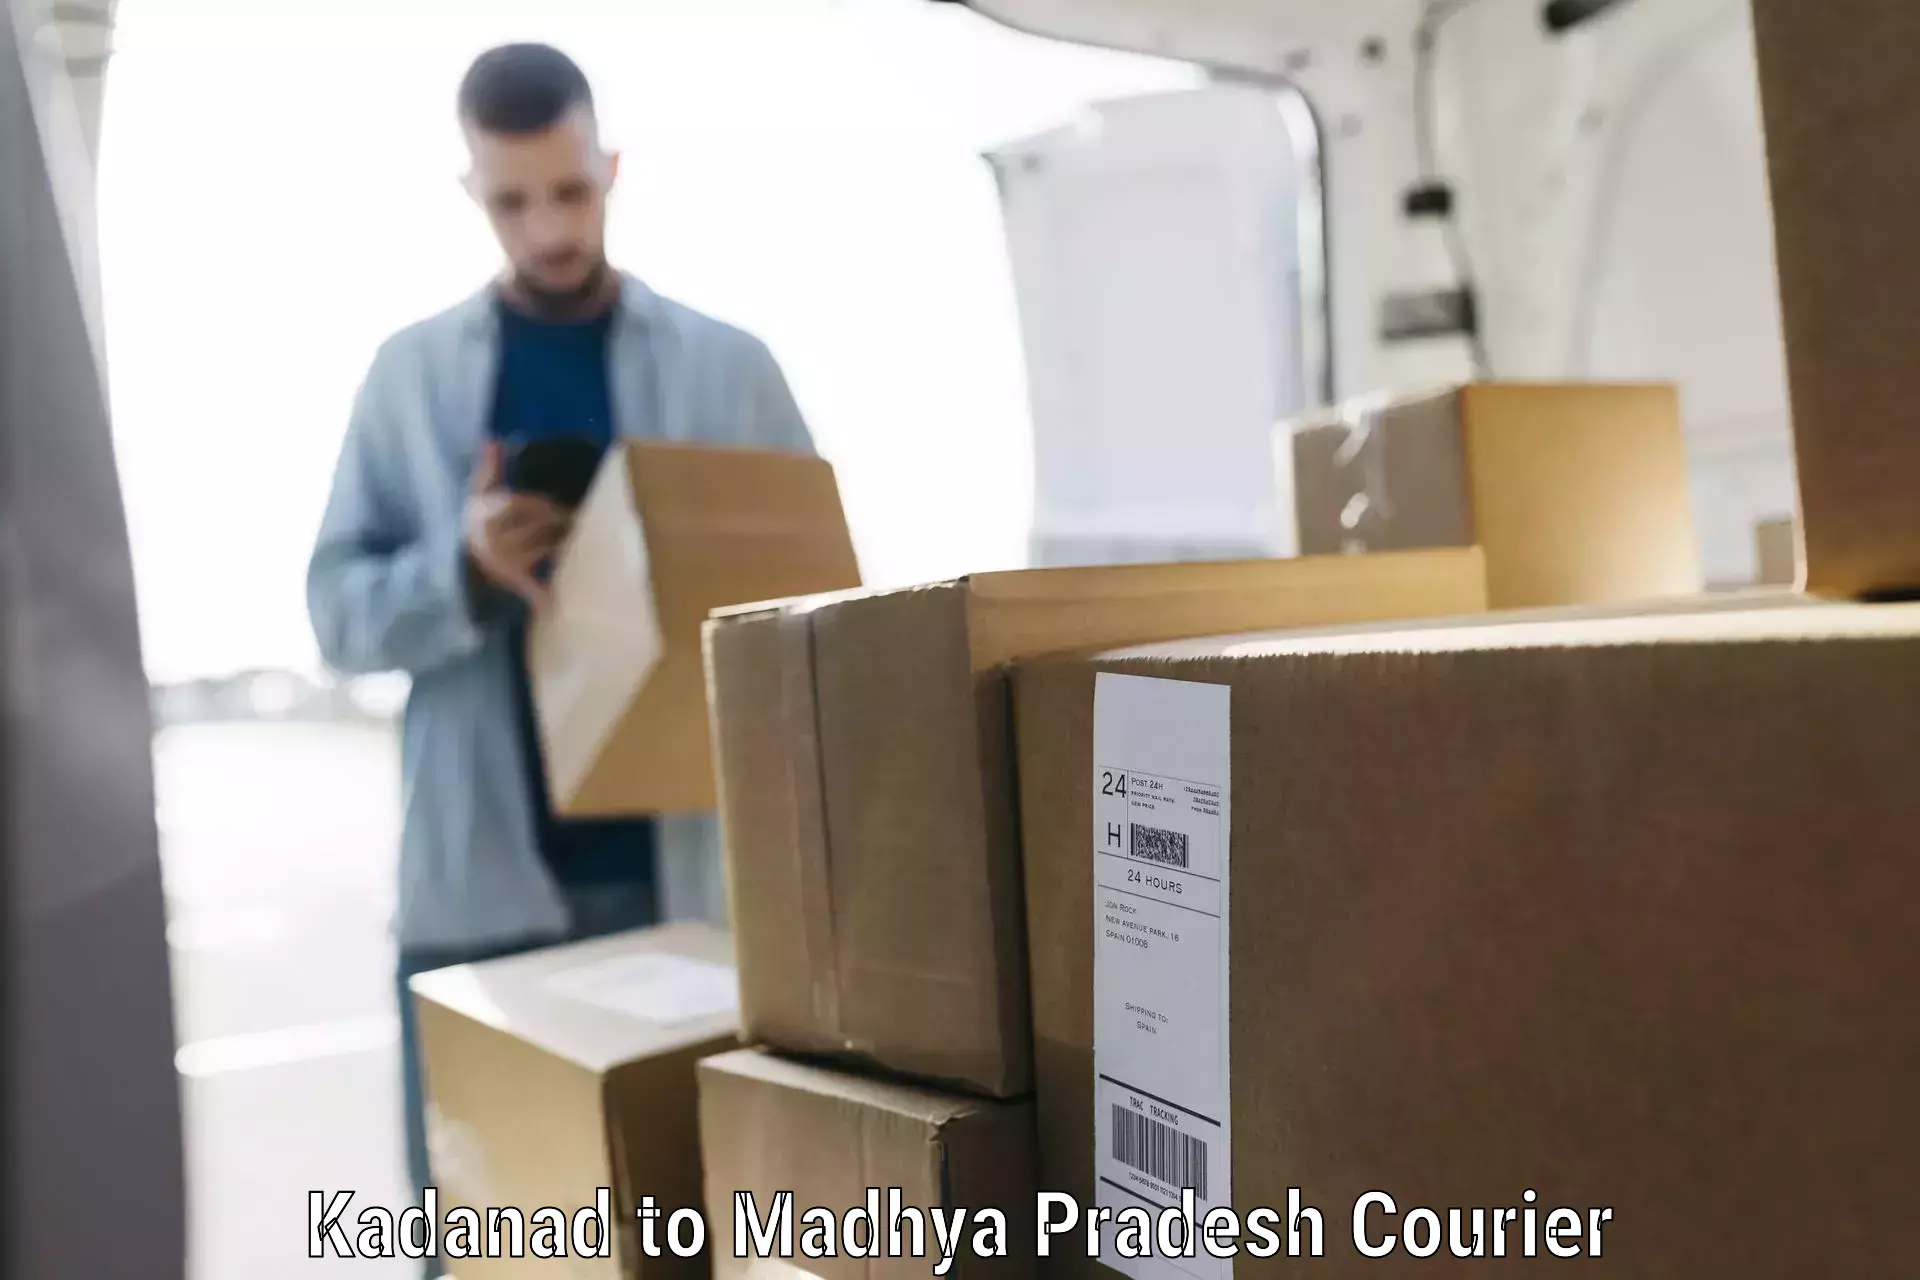 Luggage shipment tracking Kadanad to Mandla